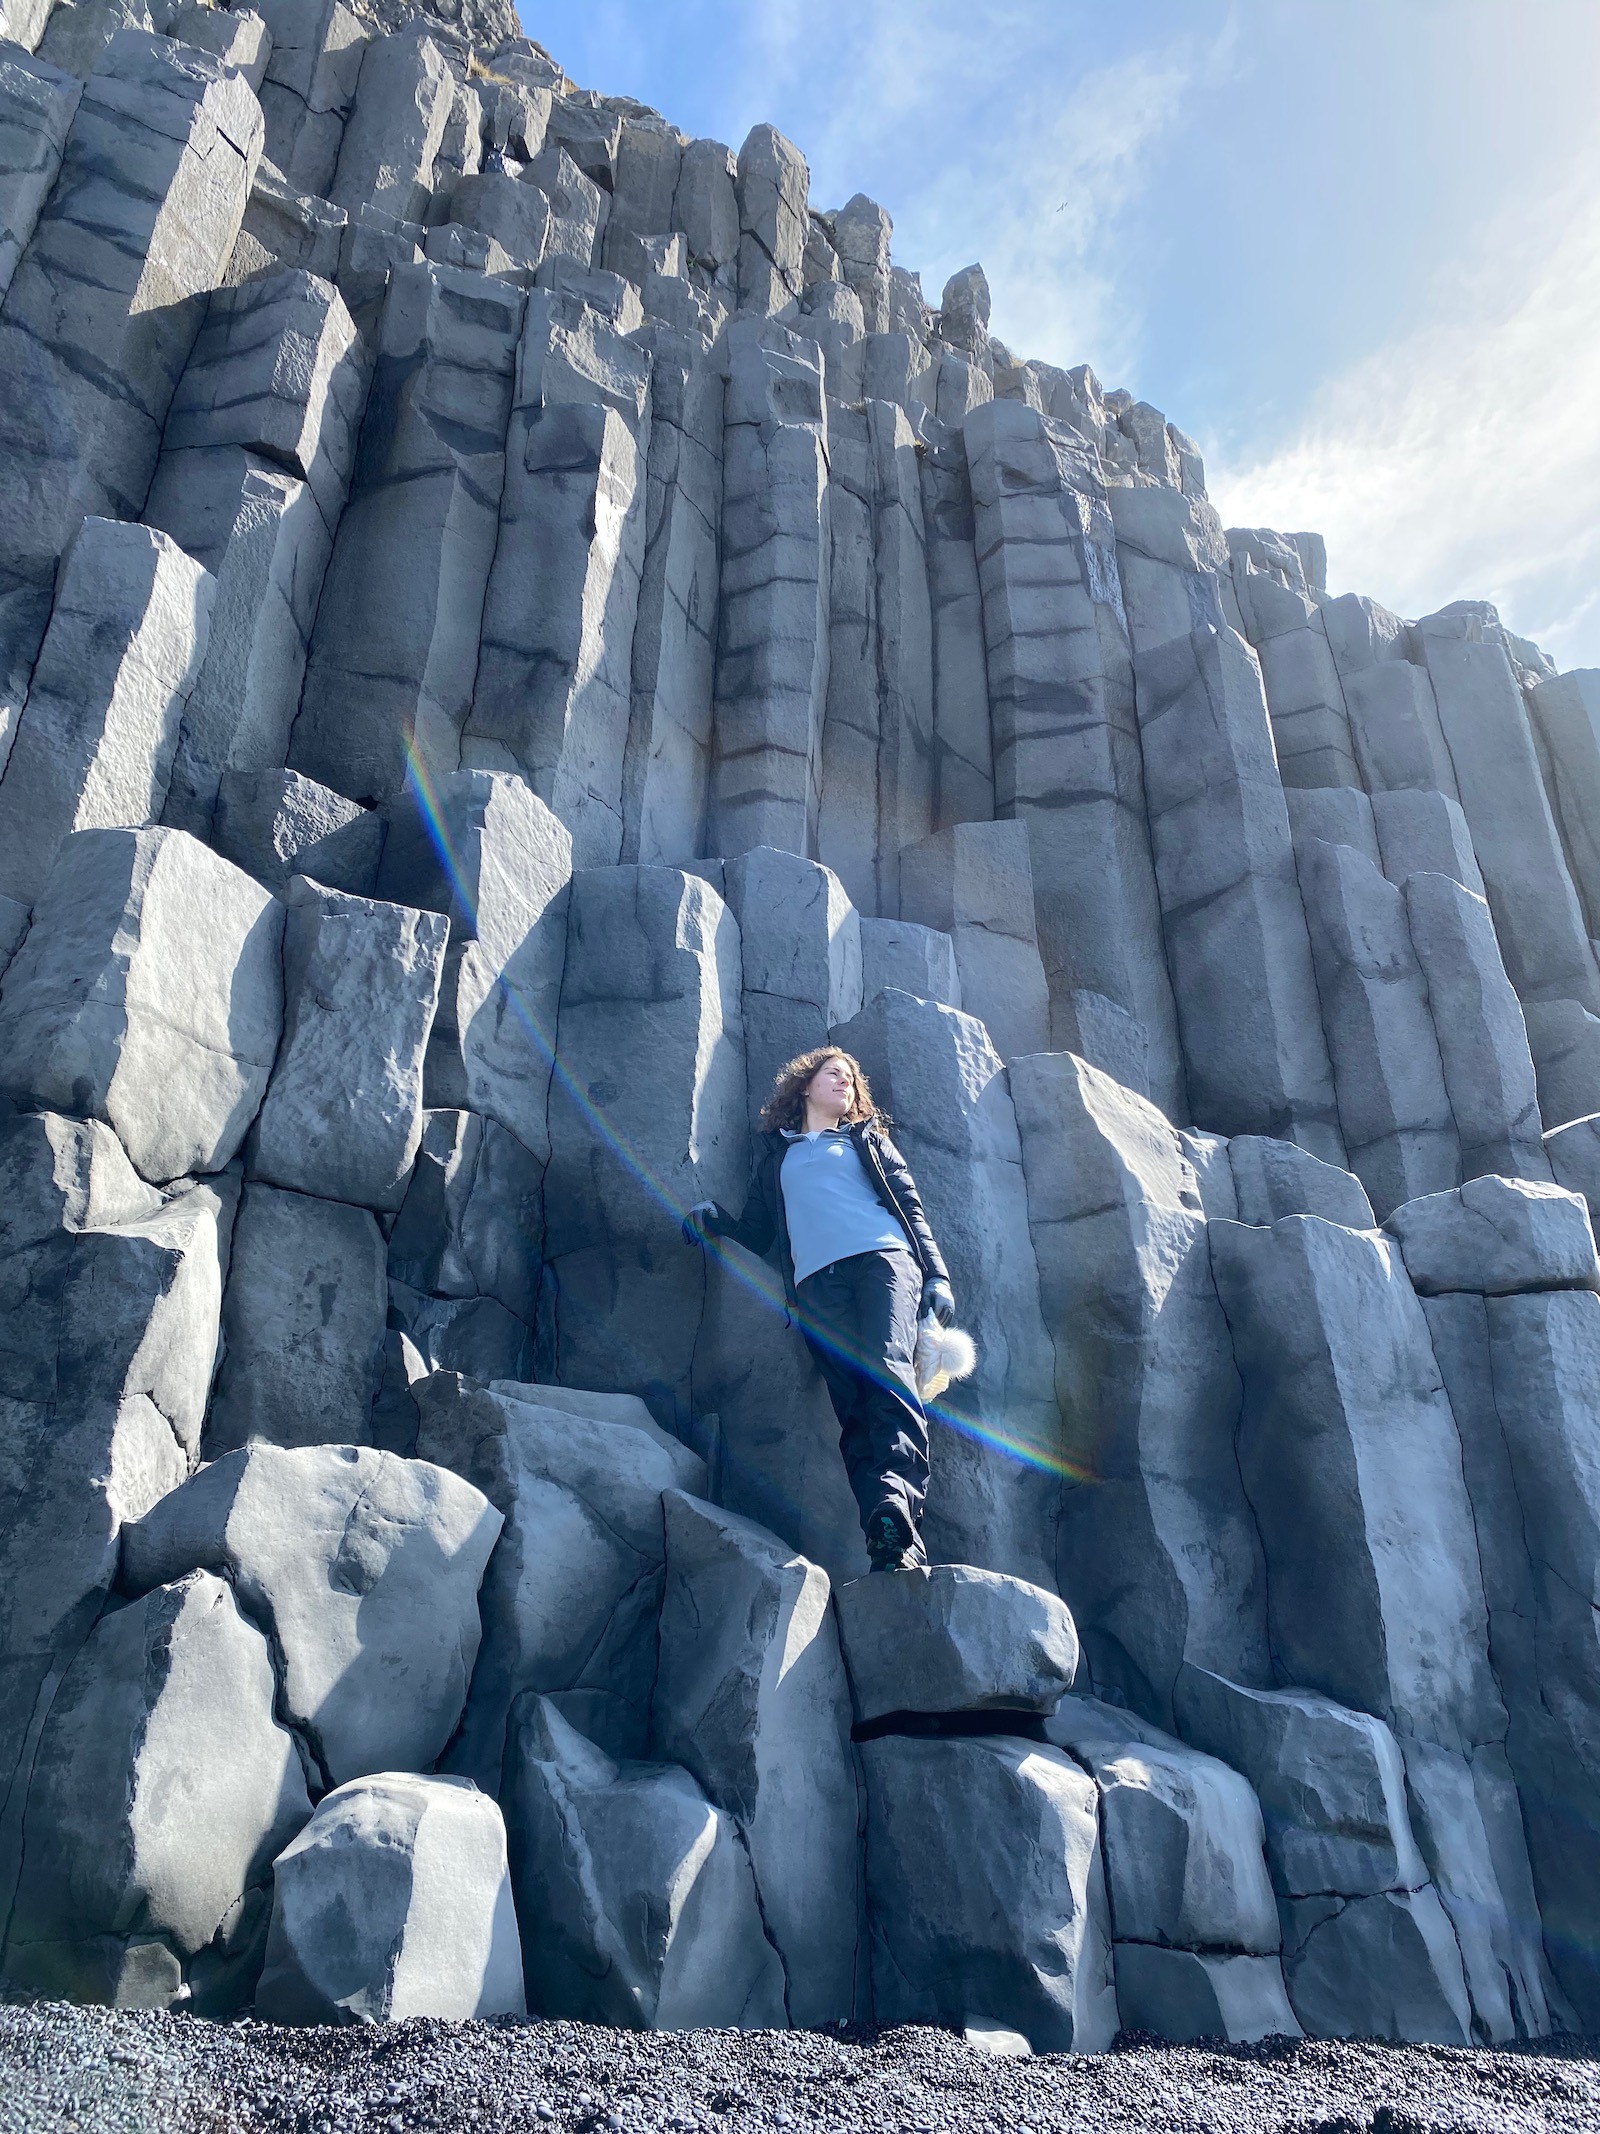 Teen girl posing on the Basalt Columns in Iceland. 